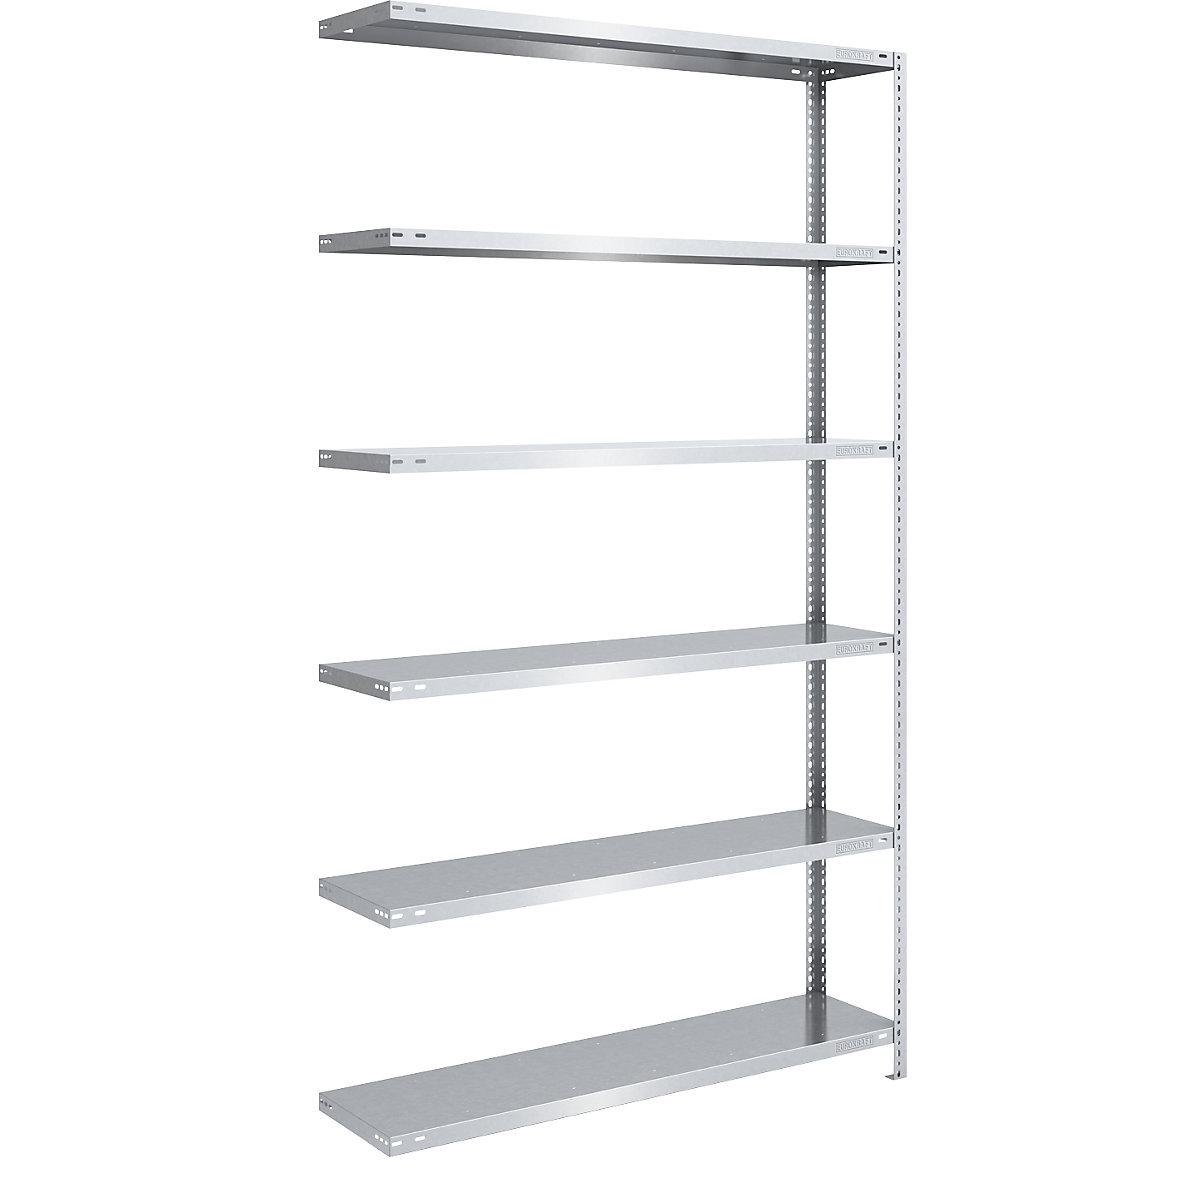 Bolt-together shelf unit, light duty, zinc plated – eurokraft pro, shelf unit height 2500 mm, shelf width 1300 mm, depth 400 mm, extension shelf unit-8